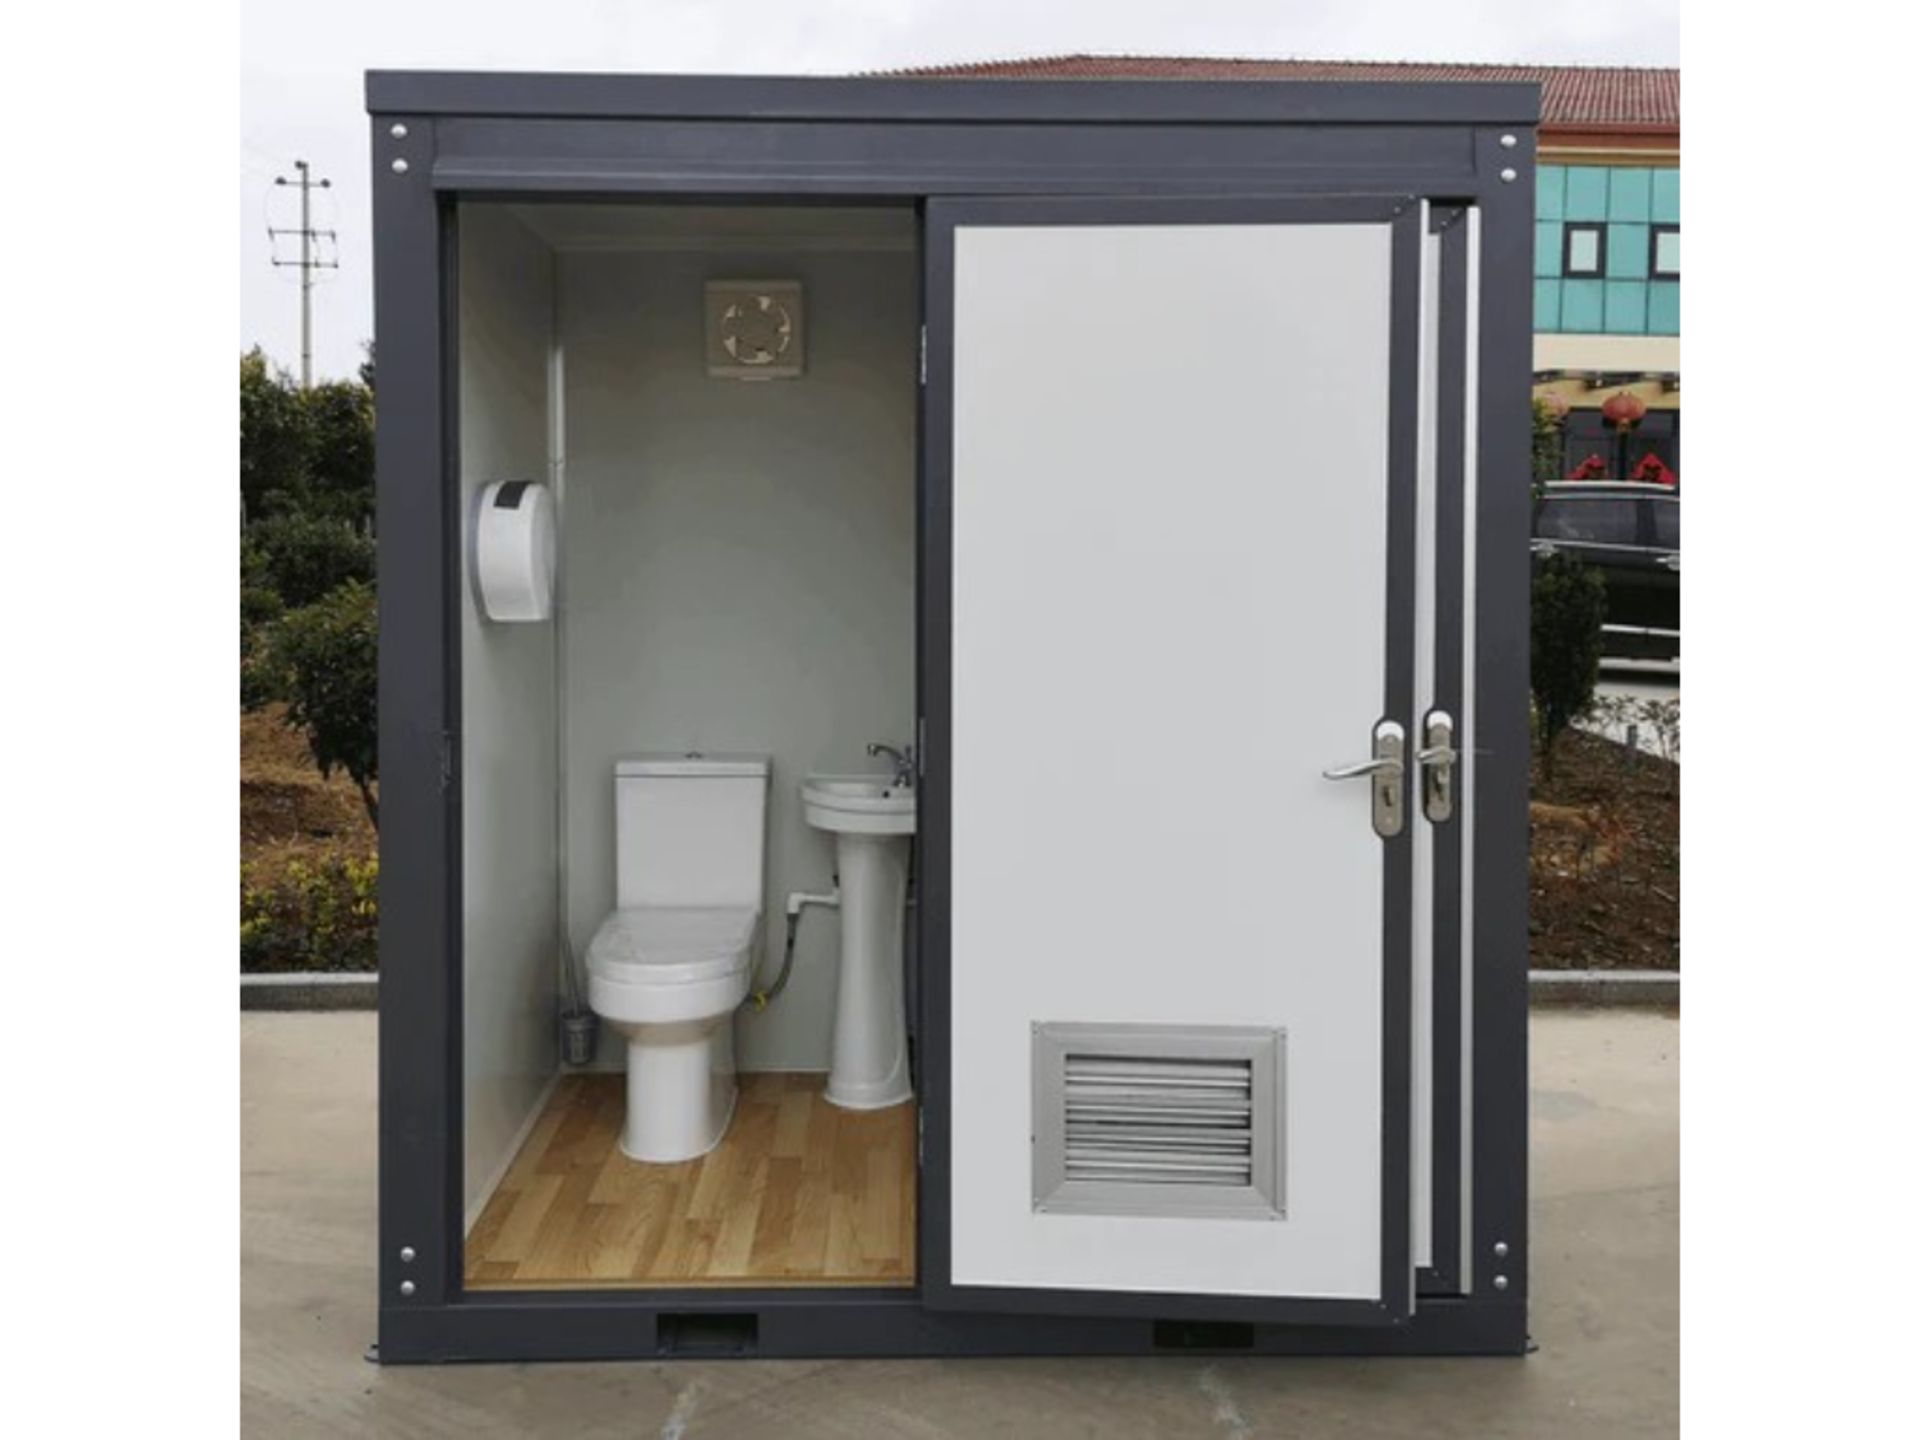 Bastone Mobile Double Toilet w/ Sink - Image 6 of 14